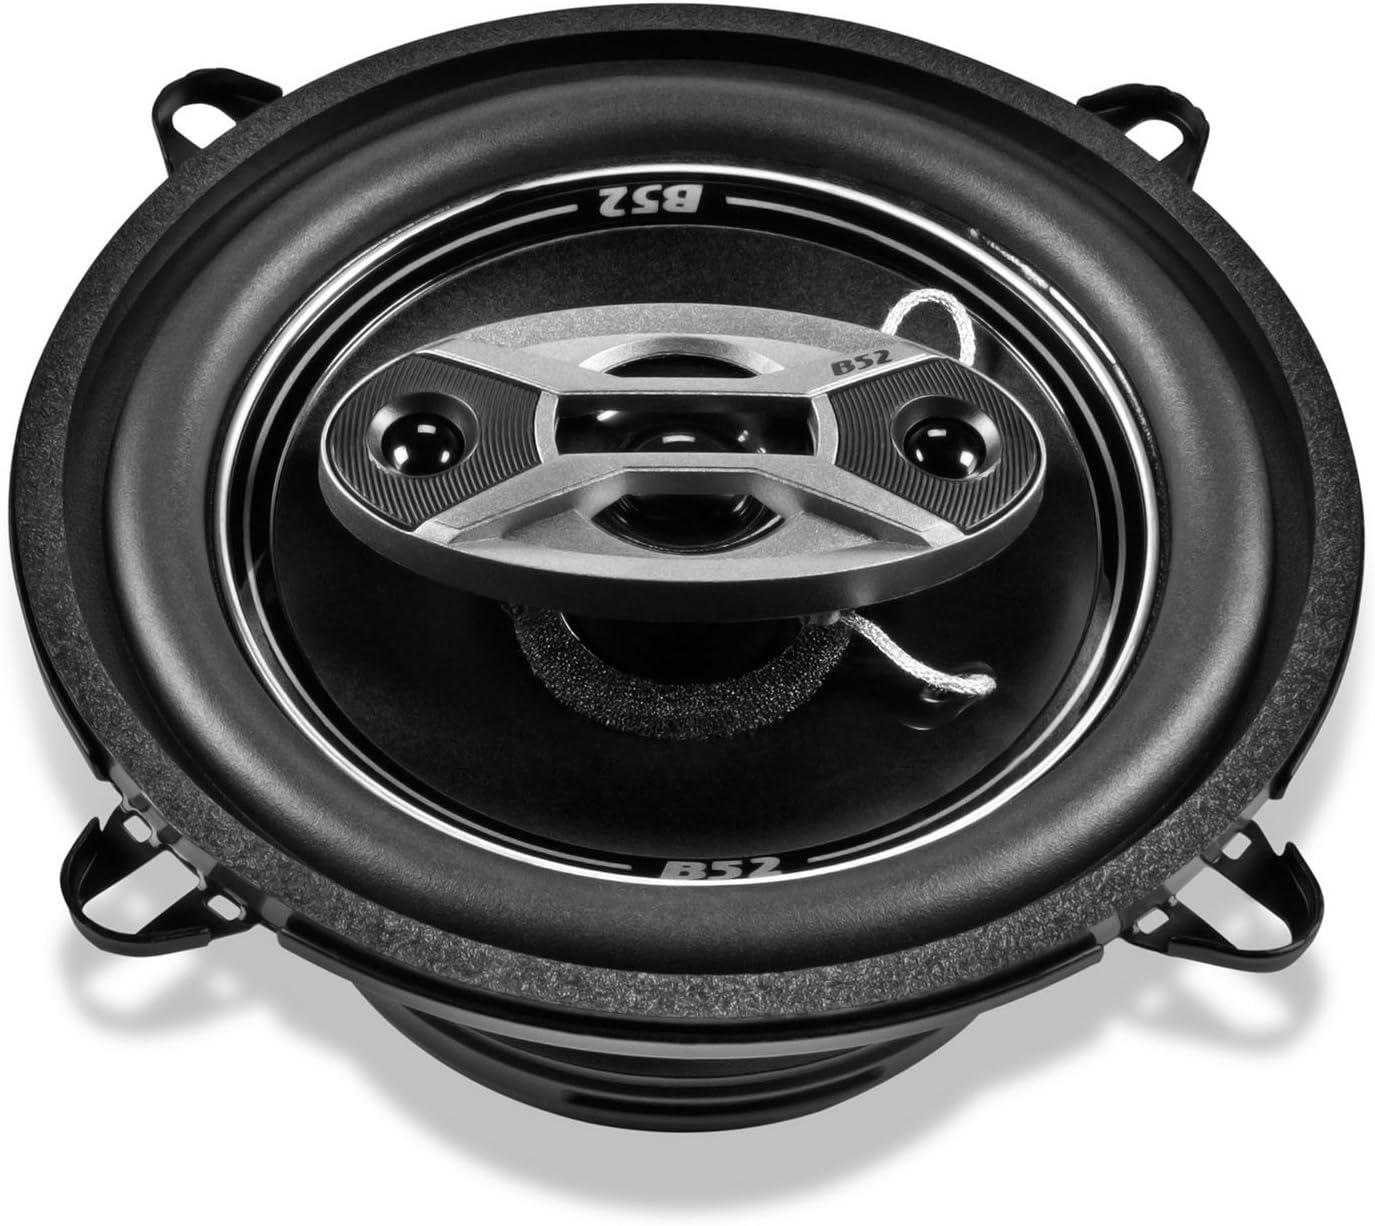 ELS-5.2 II 520W 5.25-Inch 4-Way Car Speakers for Premium Audio